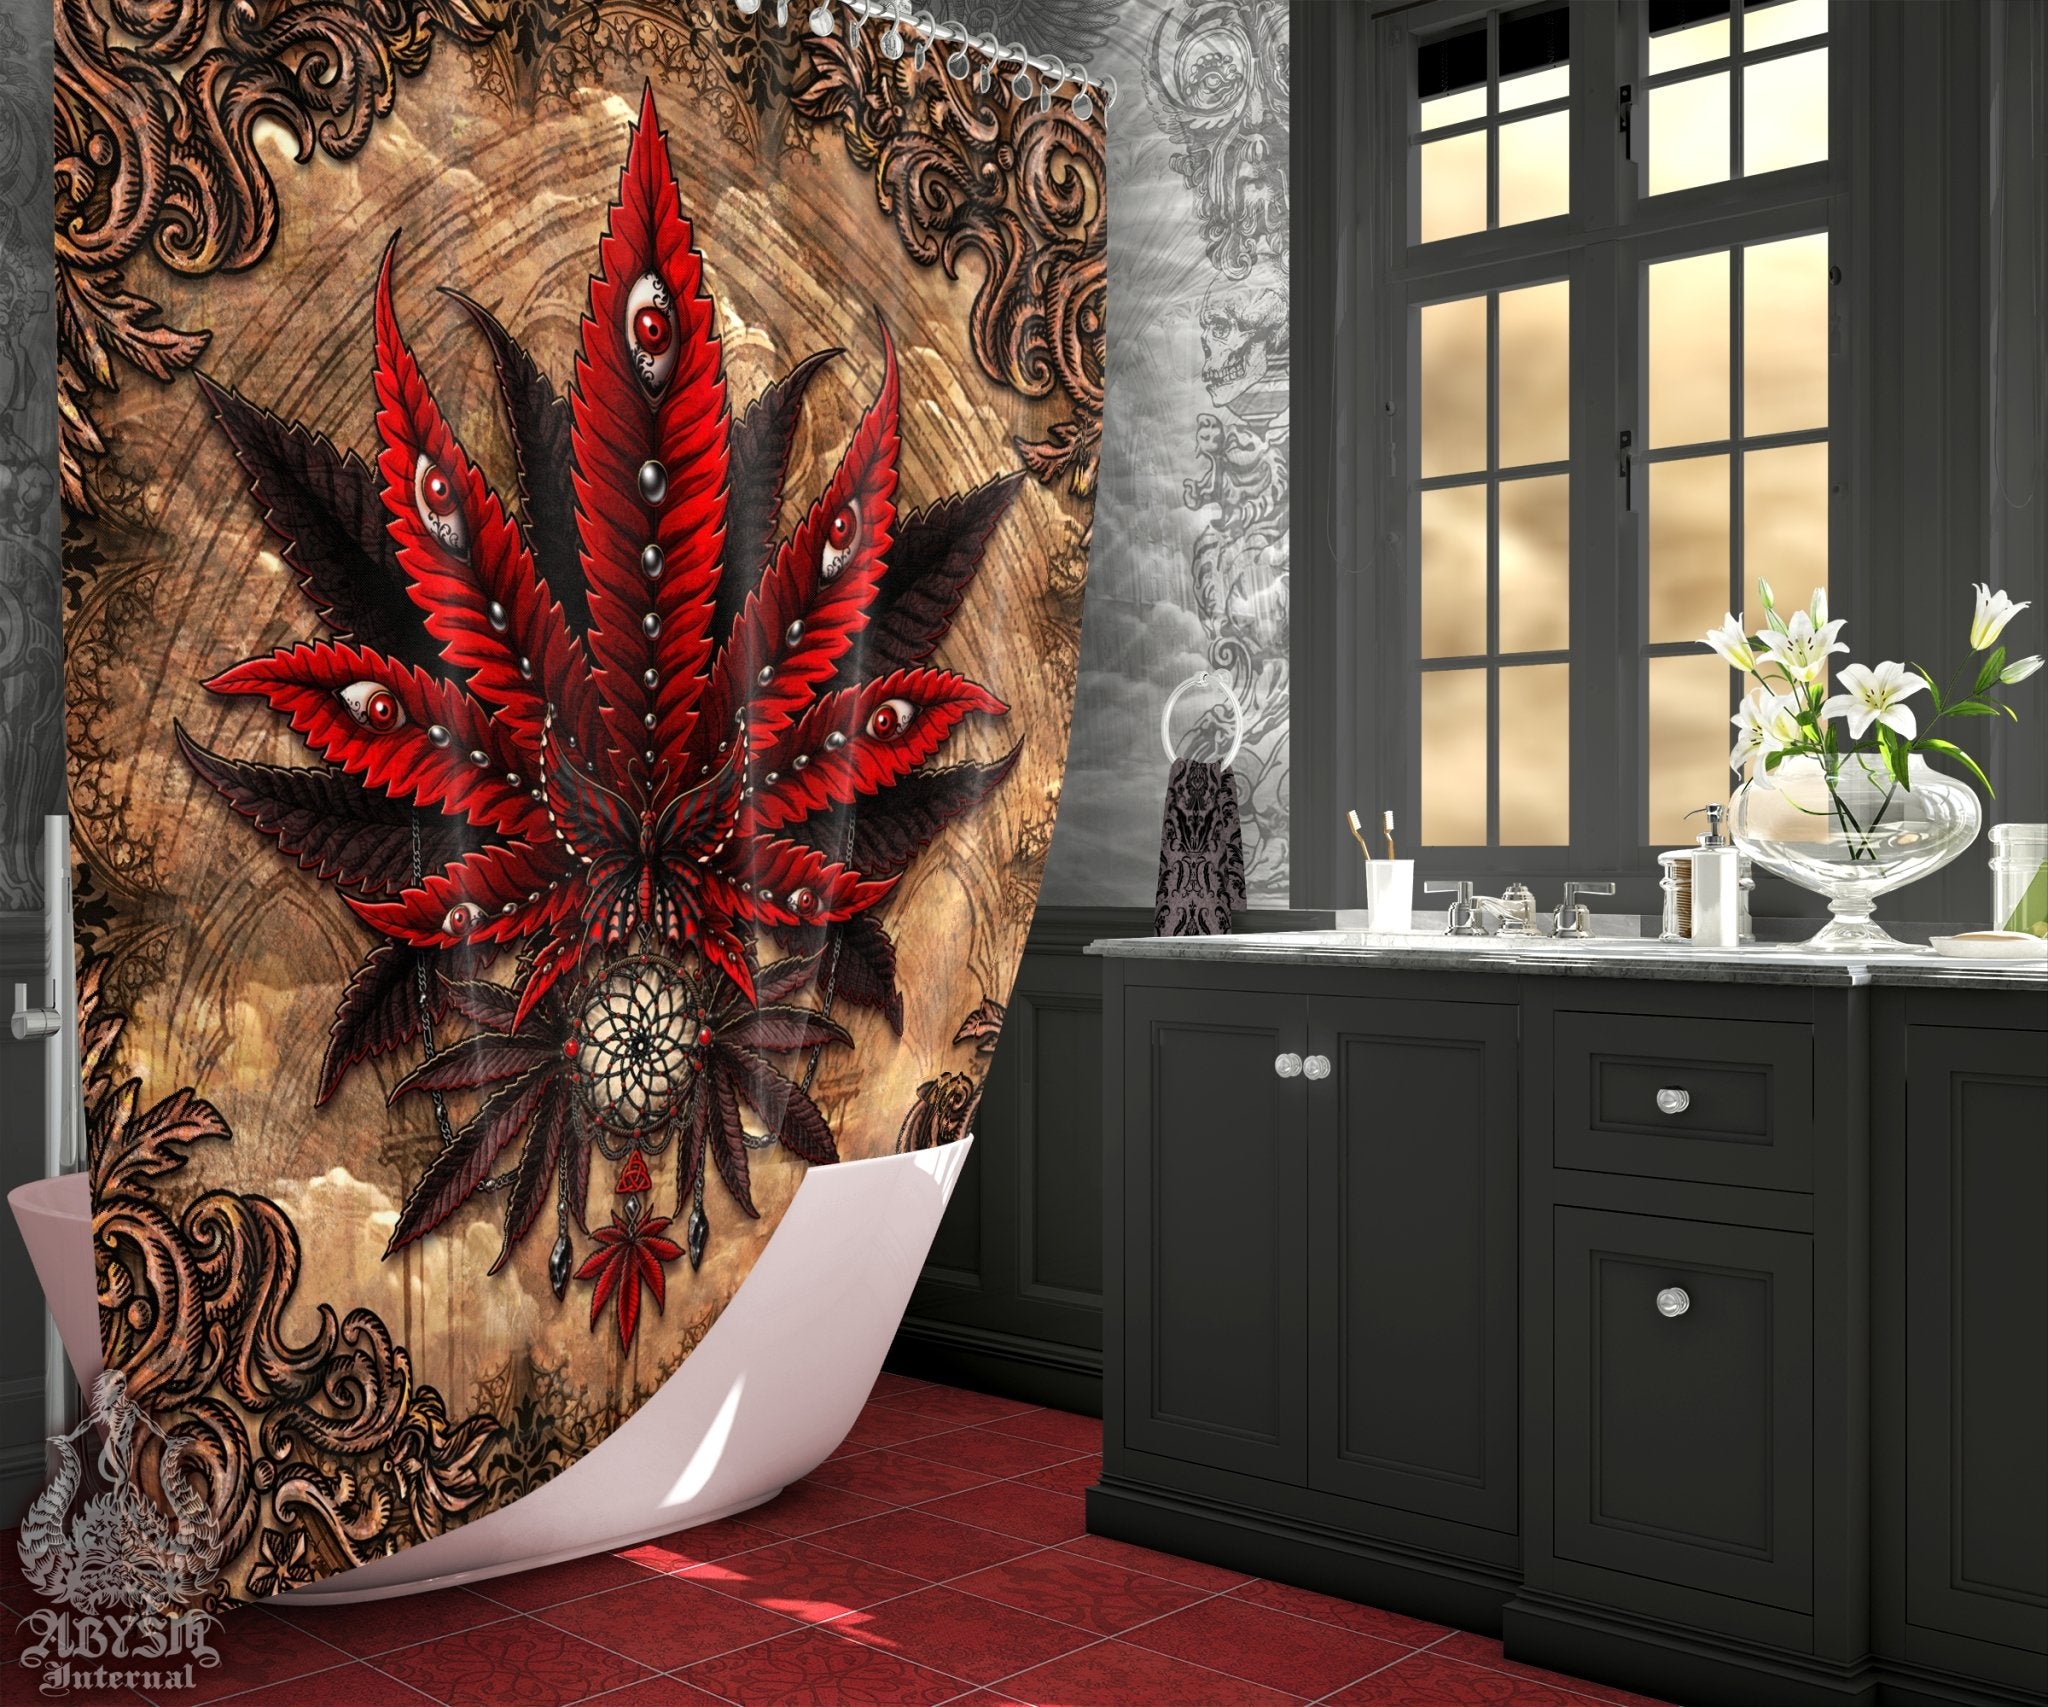 Weed Shower Curtain, Gothic Bathroom Decor, Cannabis Print, Alternative 420 Home Art - Marijuana, Horror Goth Beige - Abysm Internal